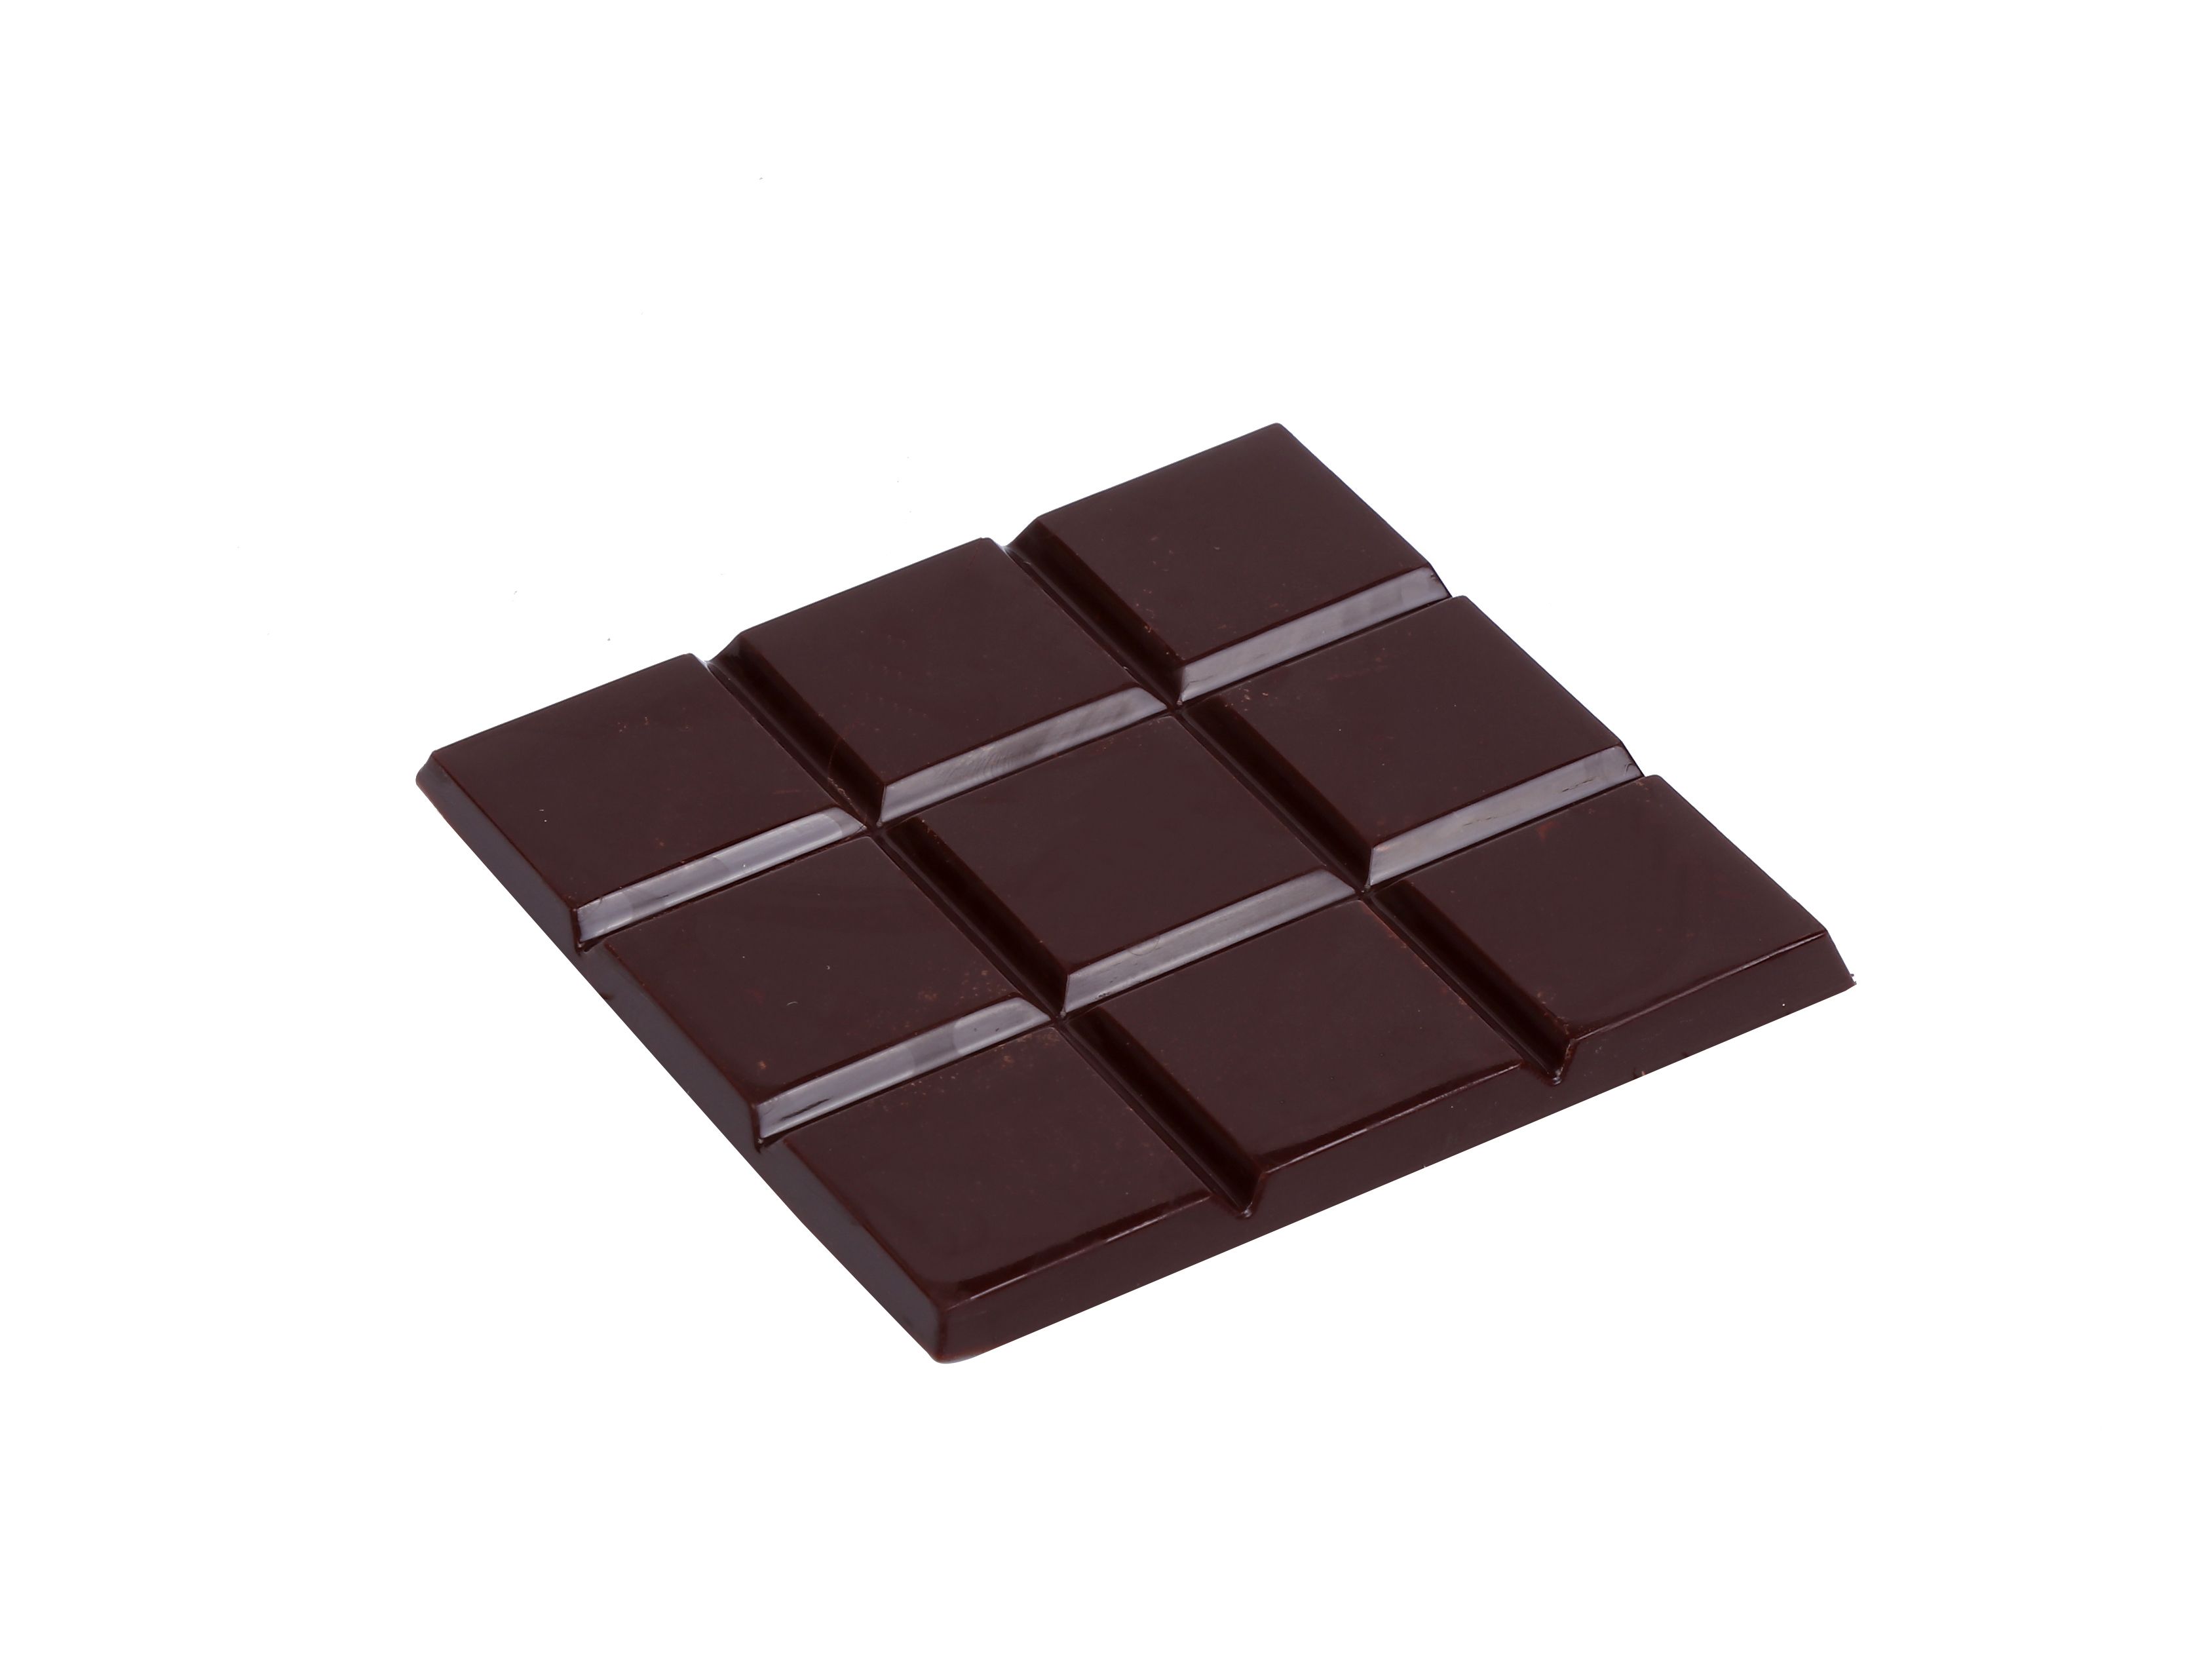 https://www.dhresource.com/0x0s/f2-albu-g5-M01-4D-11-rBVaI1k3x5aAD3D2ABIVwSSdoAs667.jpg/transparency-chocolate-square-bar-polycarbonate.jpg